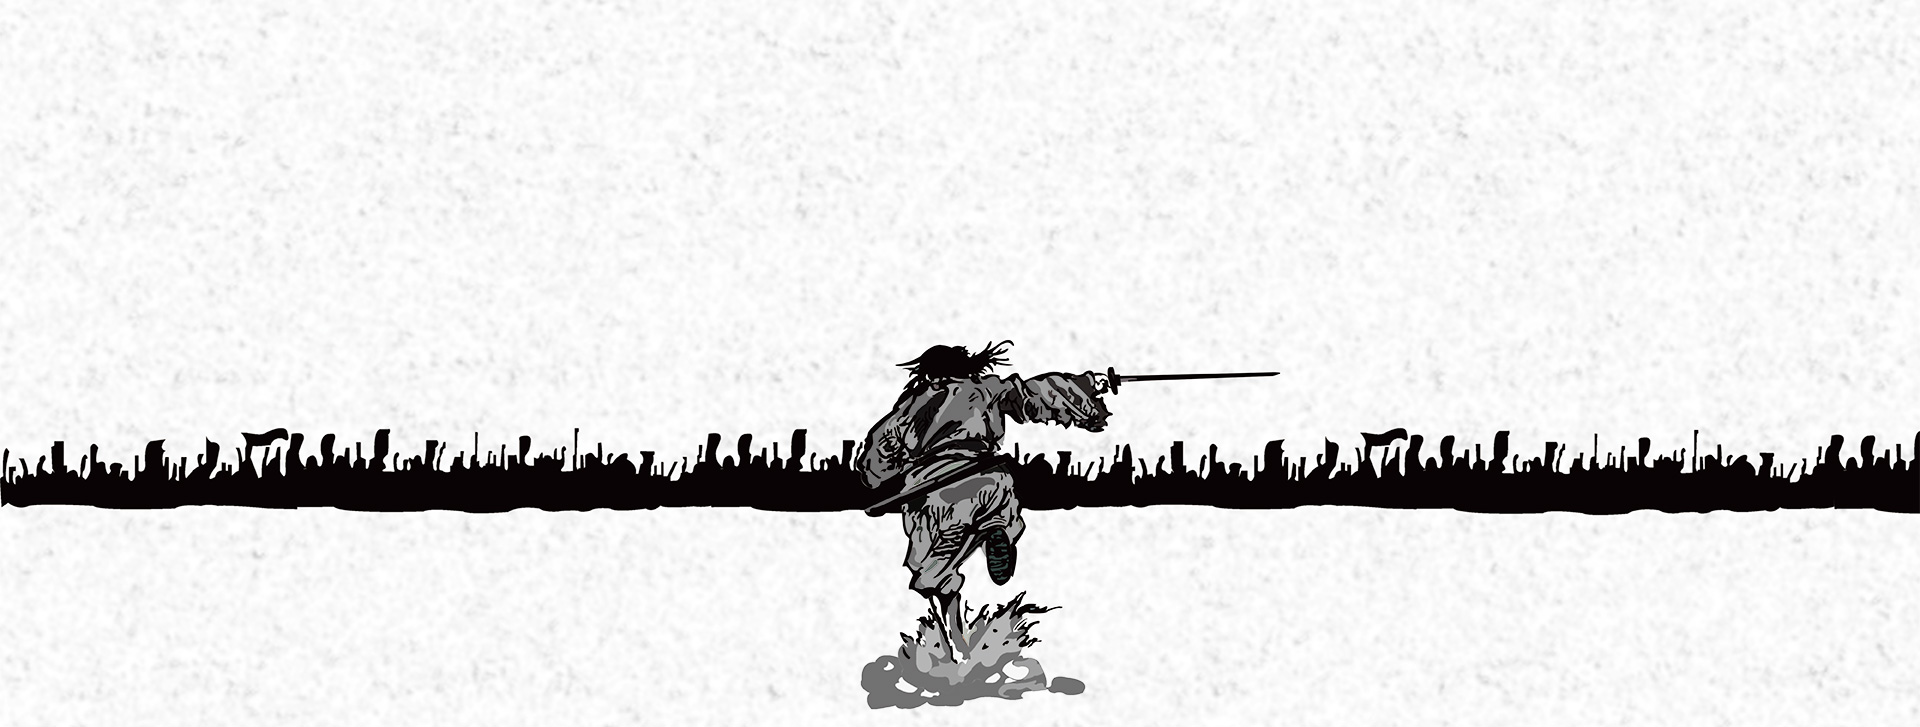 header-samurai.jpg